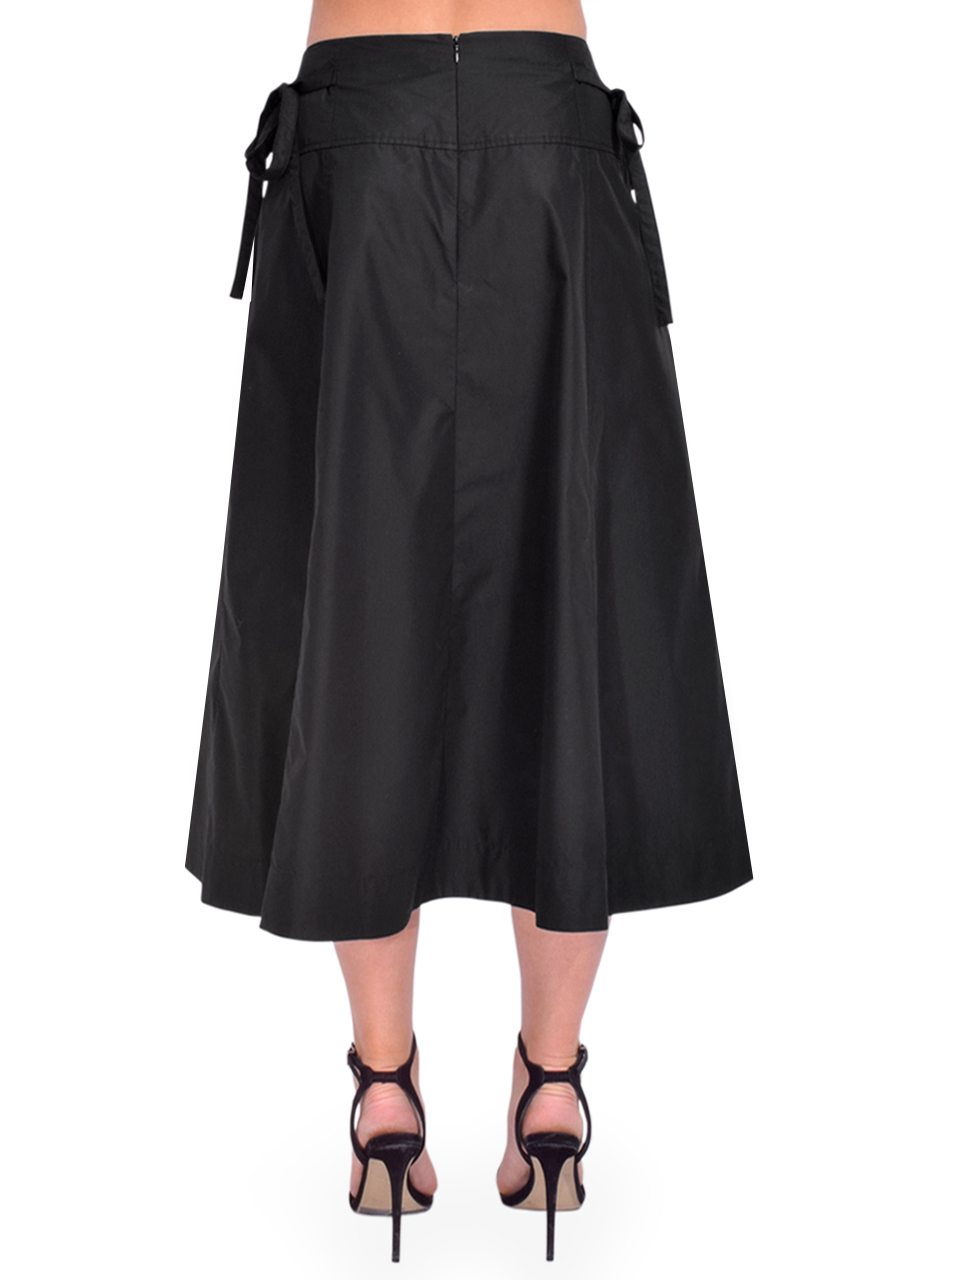 3.1 Phillip Lim Button Front Tie Waist Midi Skirt in Black Back View 